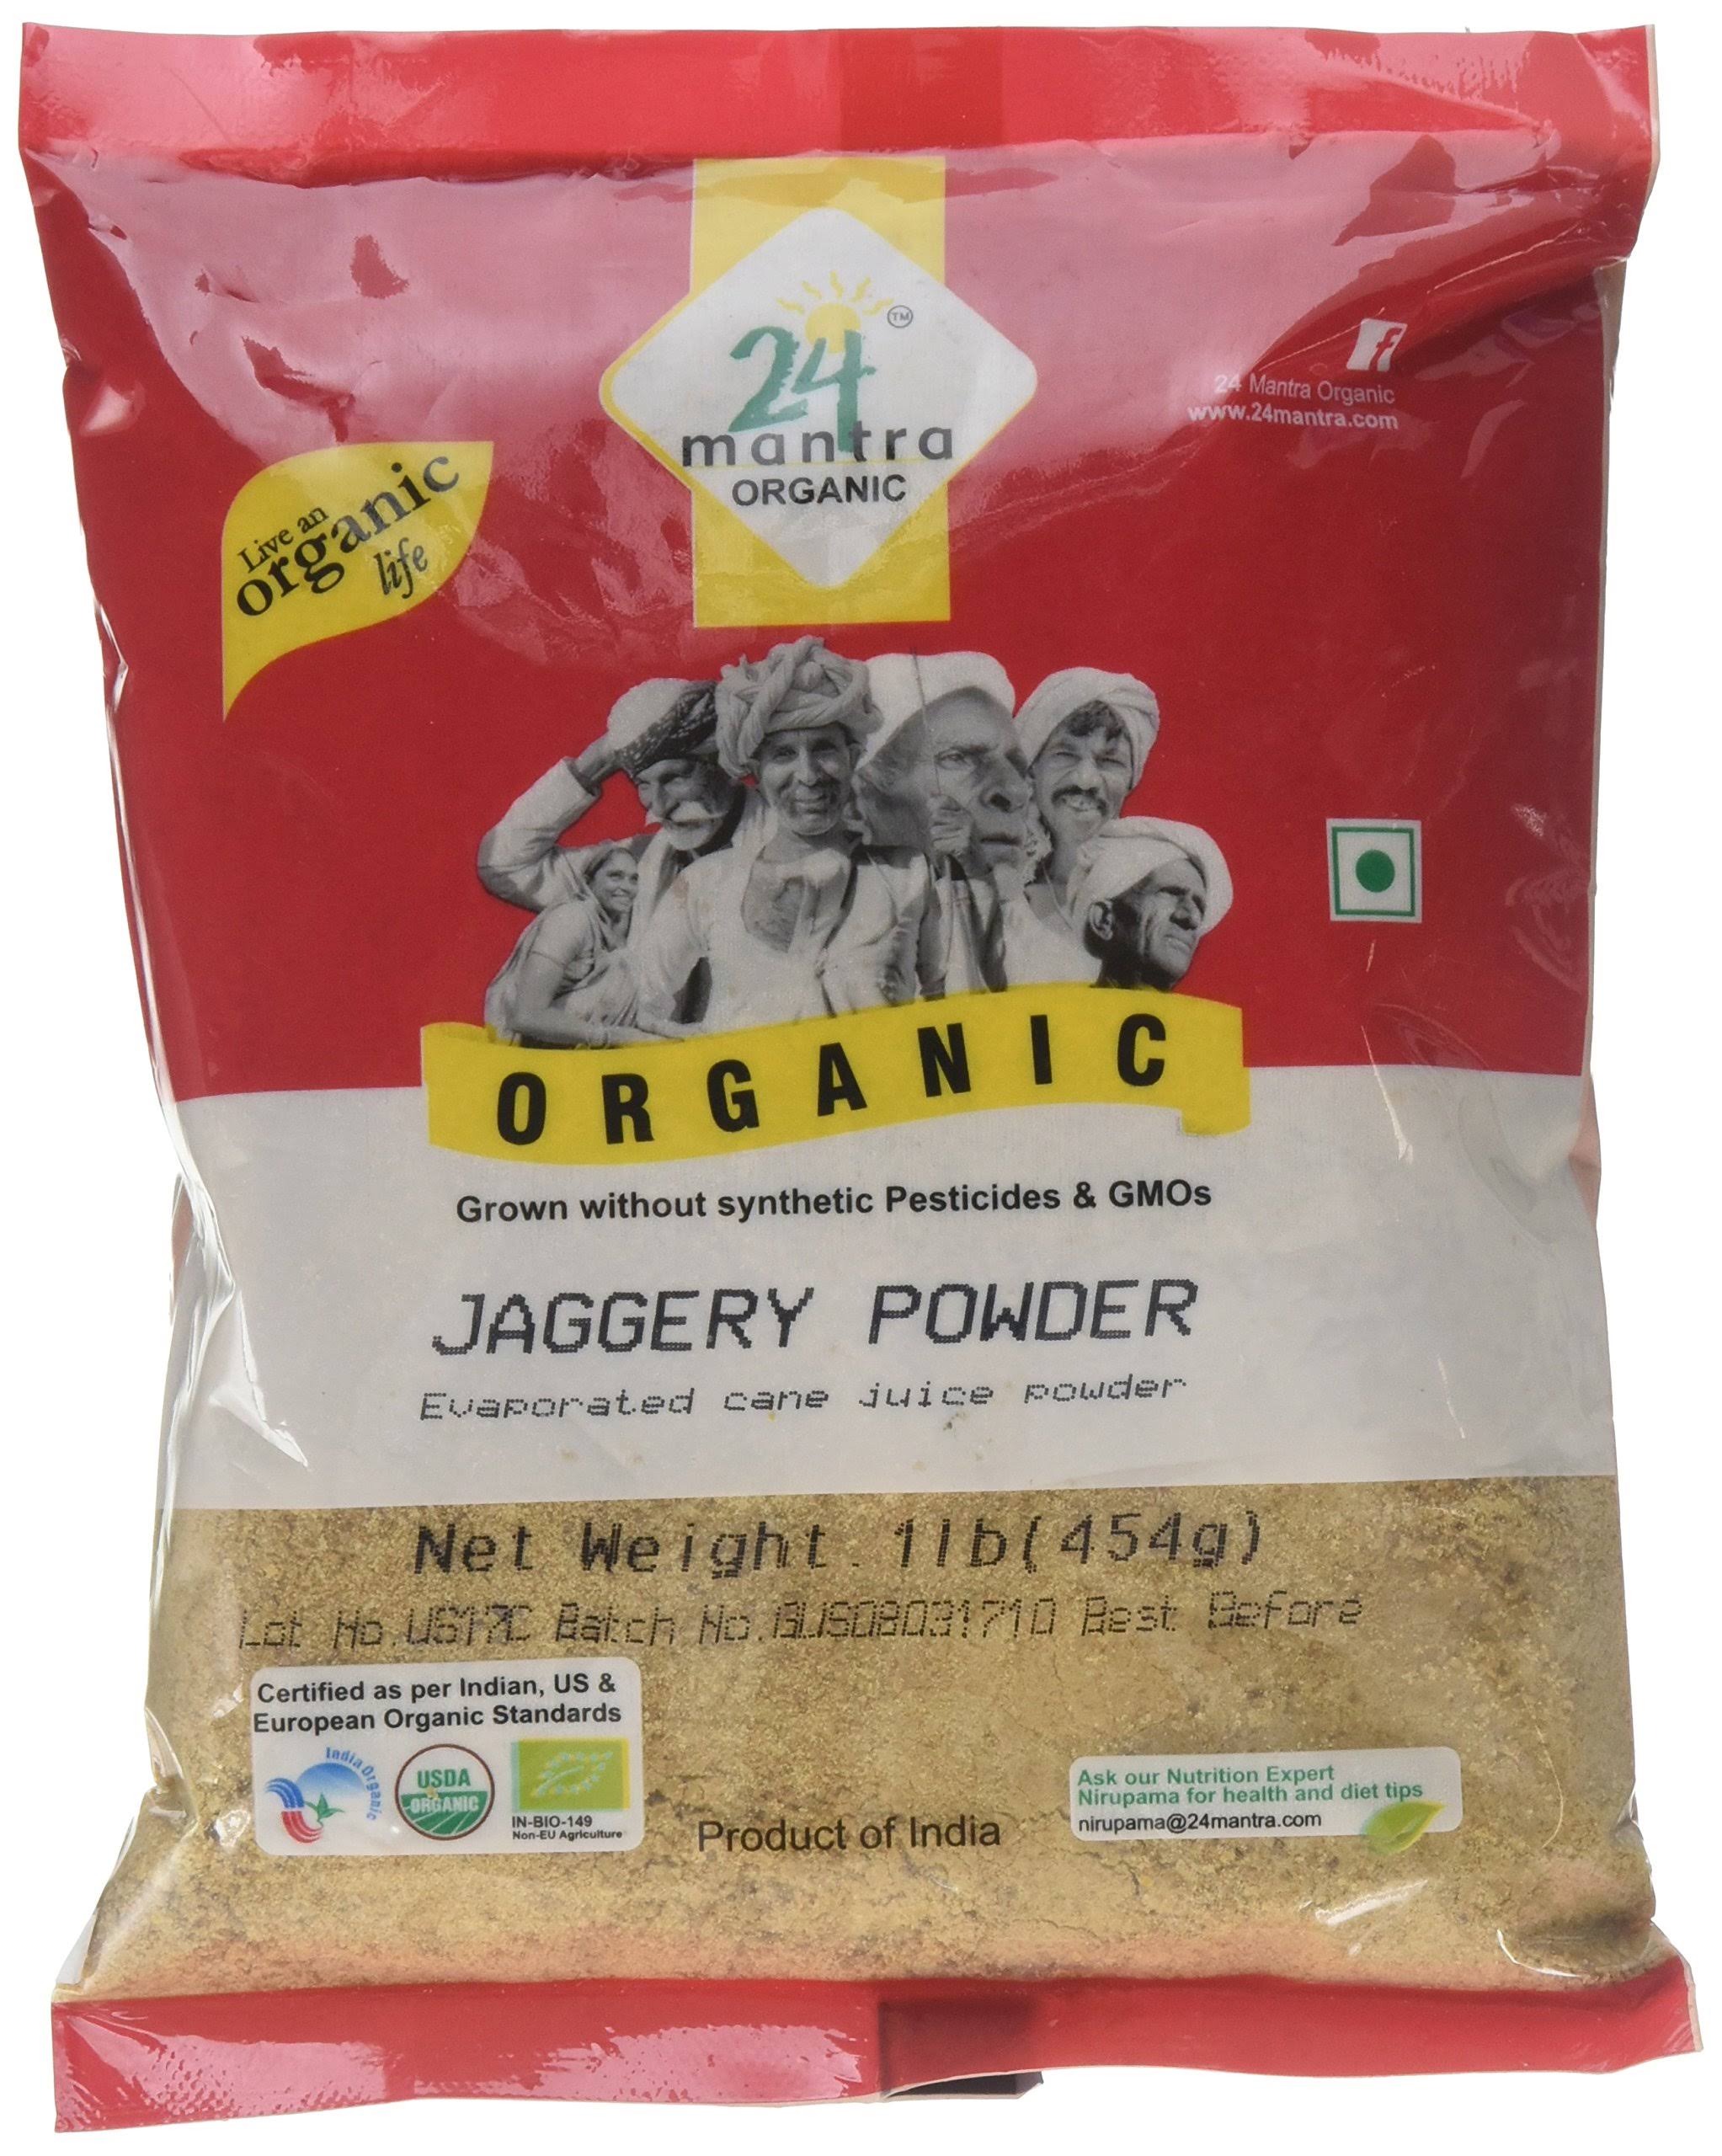 24 Mantra Organic Jaggery Powder - 1 lb